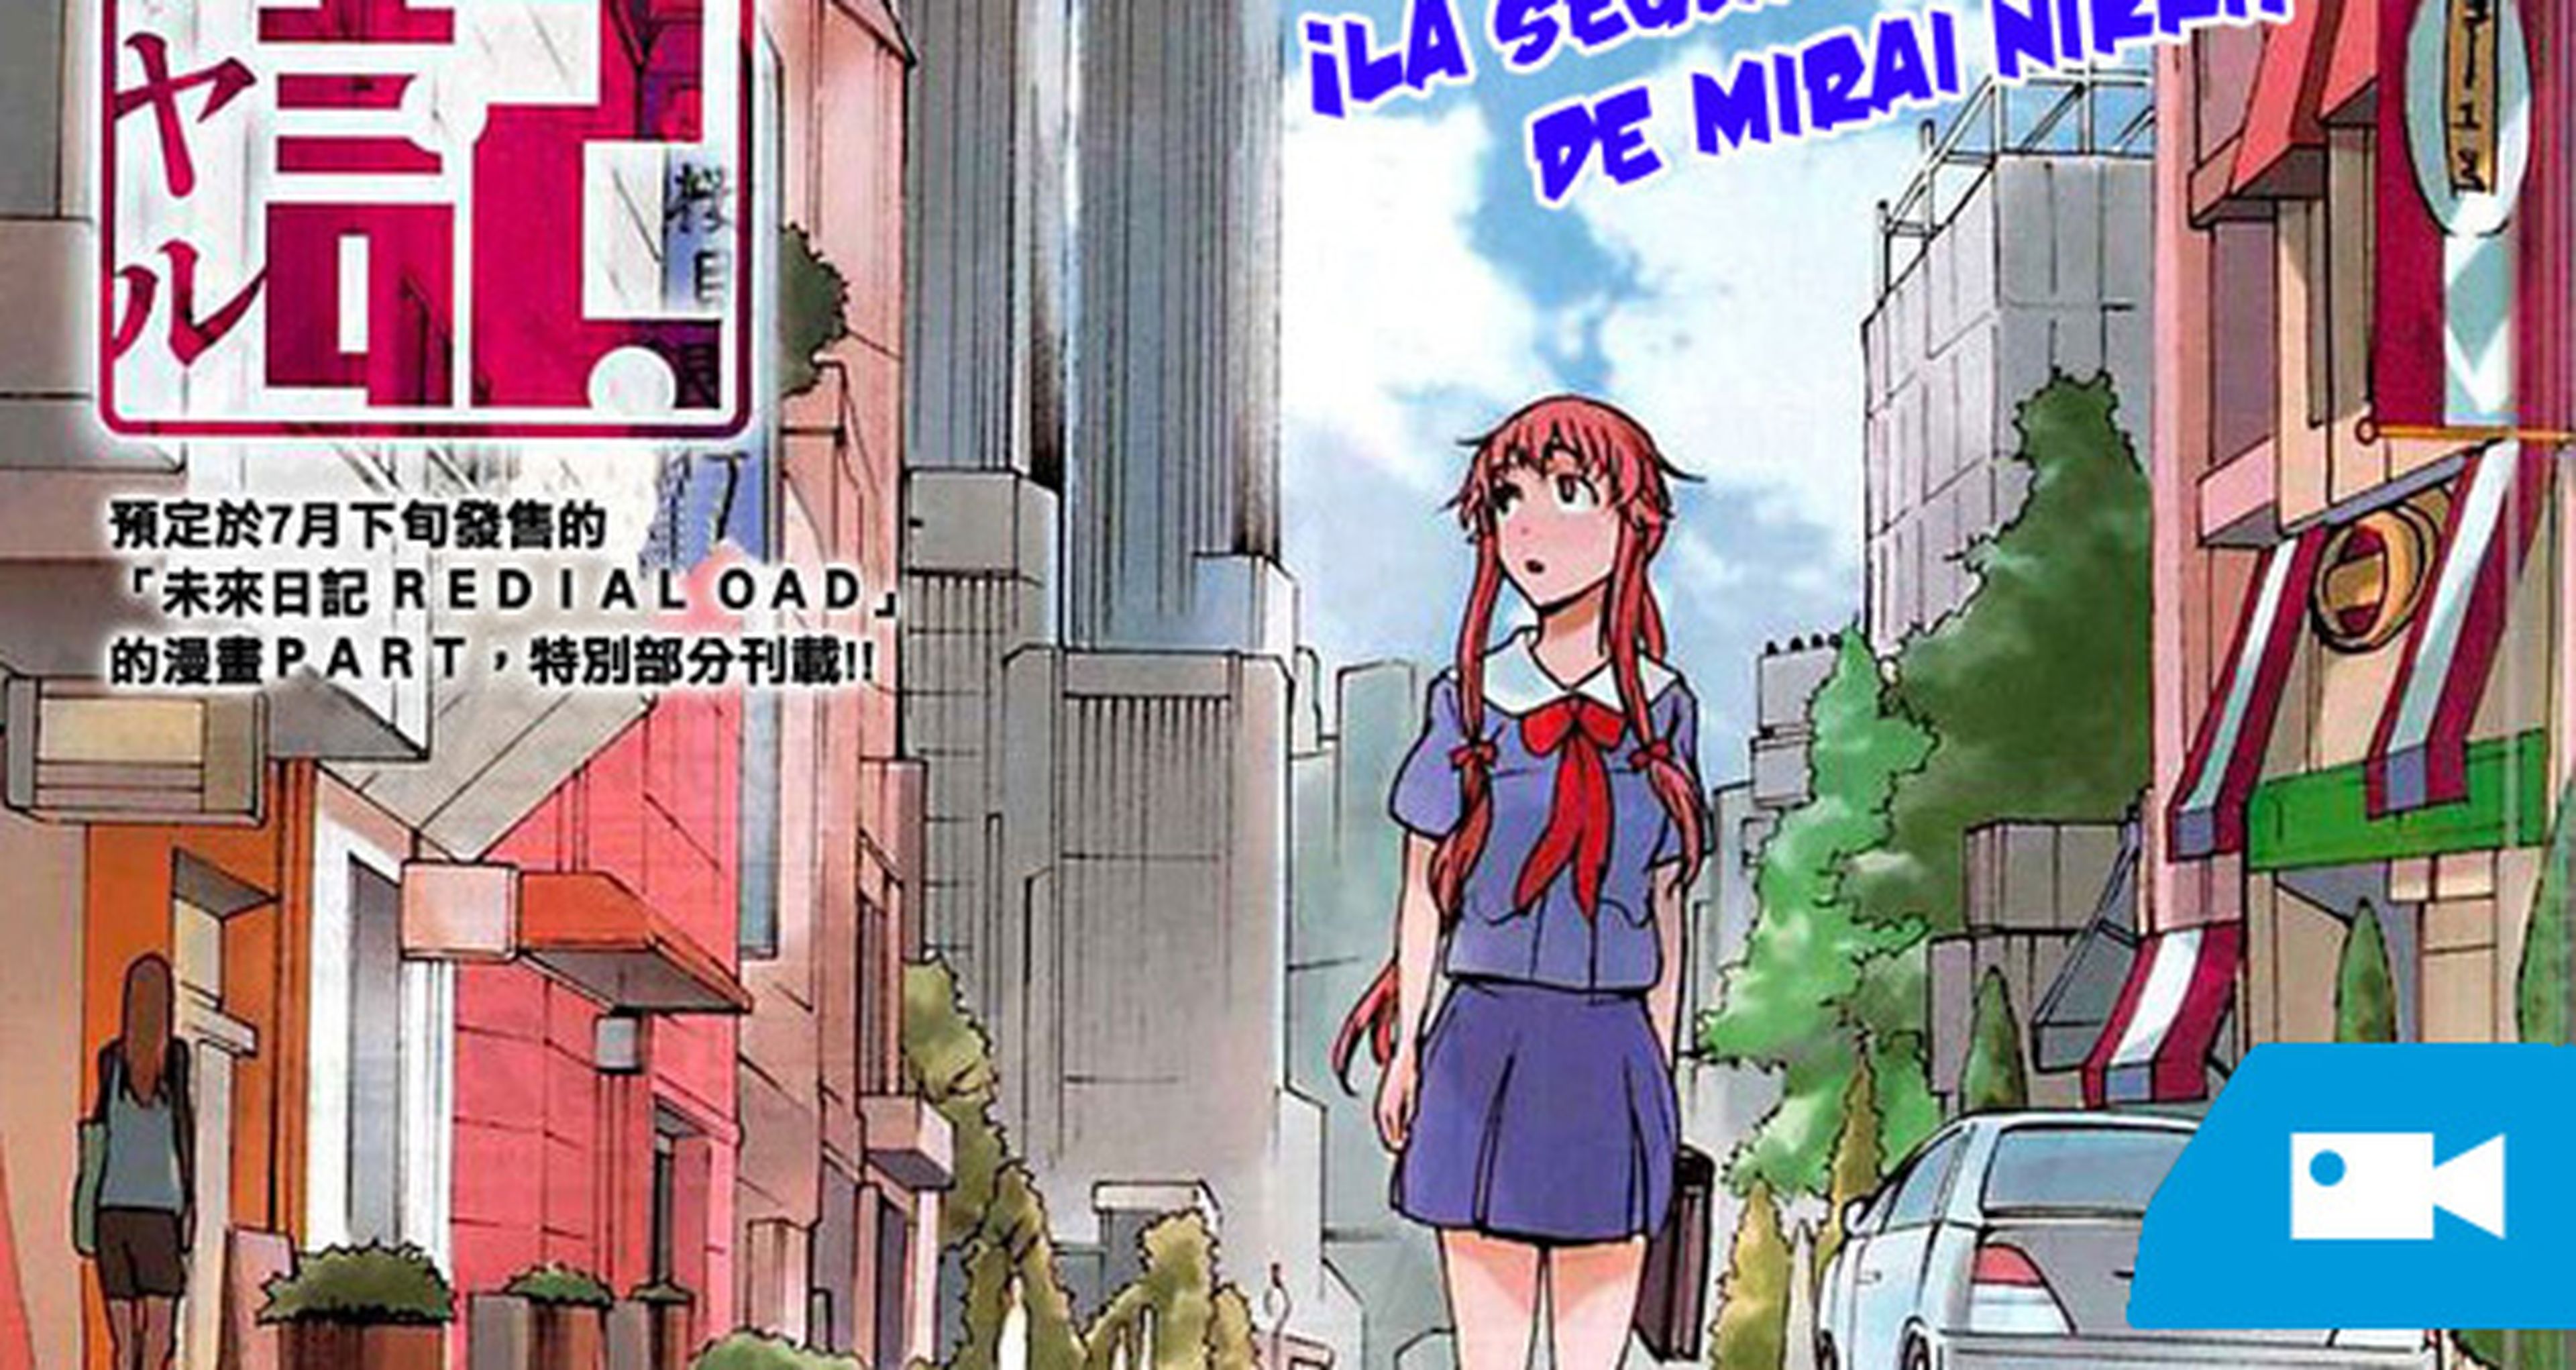 Anuncio de la próxima OVA de Mirai Nikki